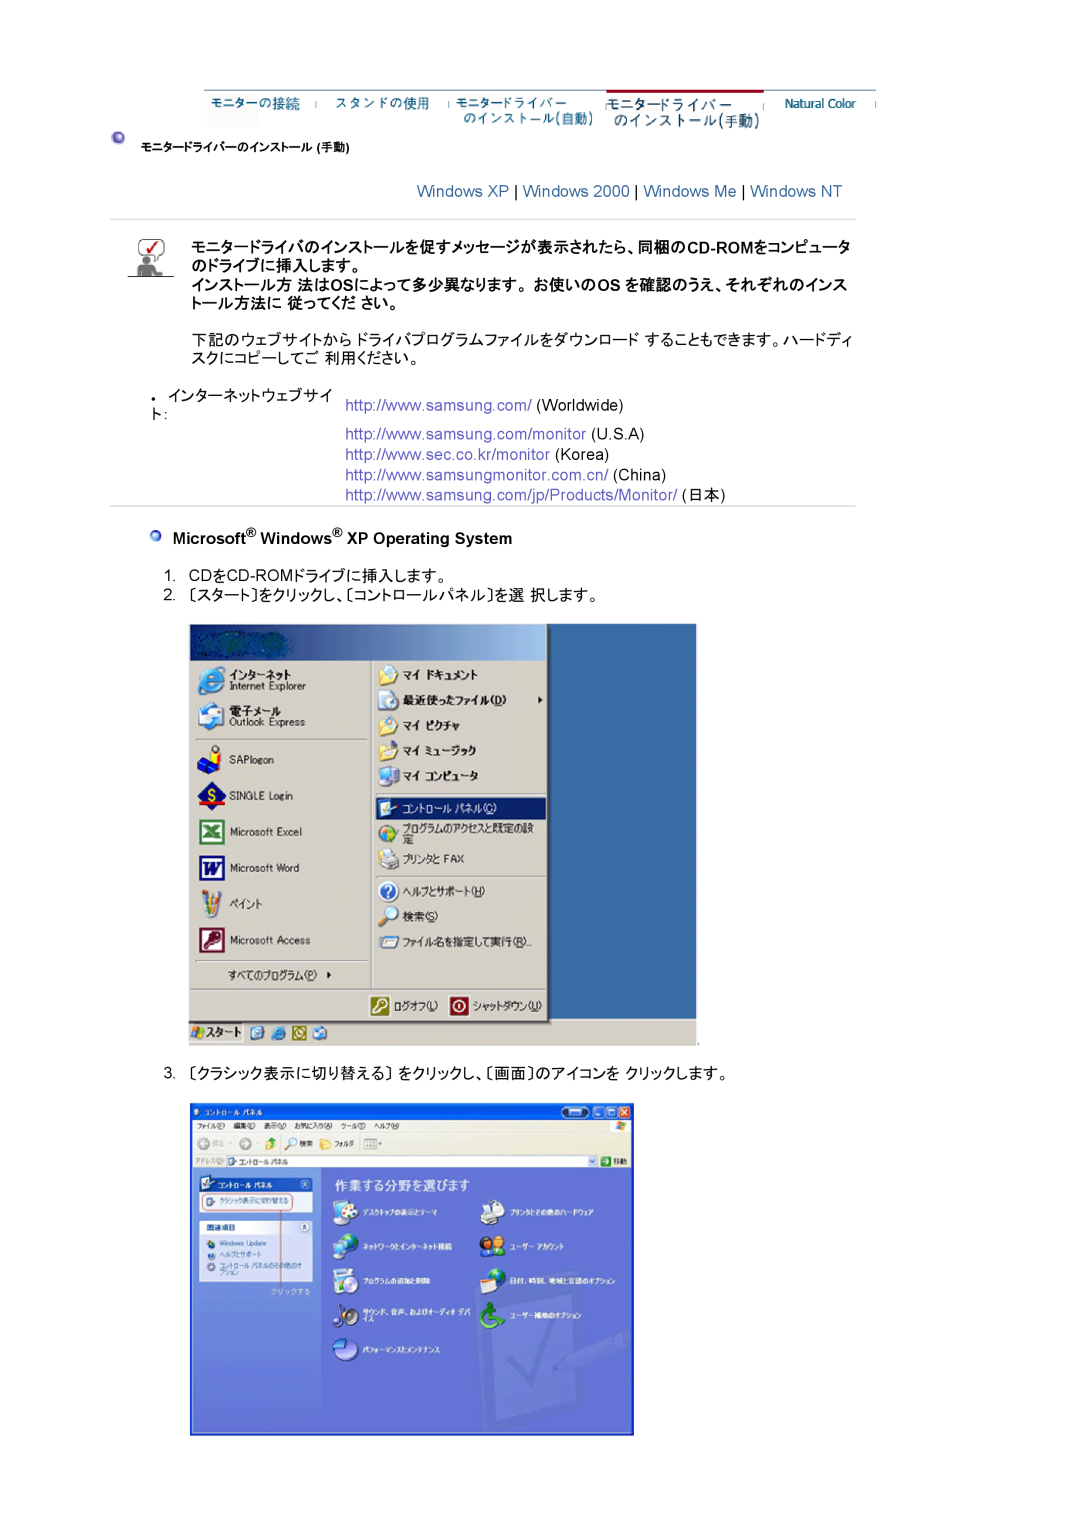 Samsung LS17HAXKBV/XSJ manual Windows XP Windows 2000 Windows Me Windows NT, Microsoft Windows XP Operating System 